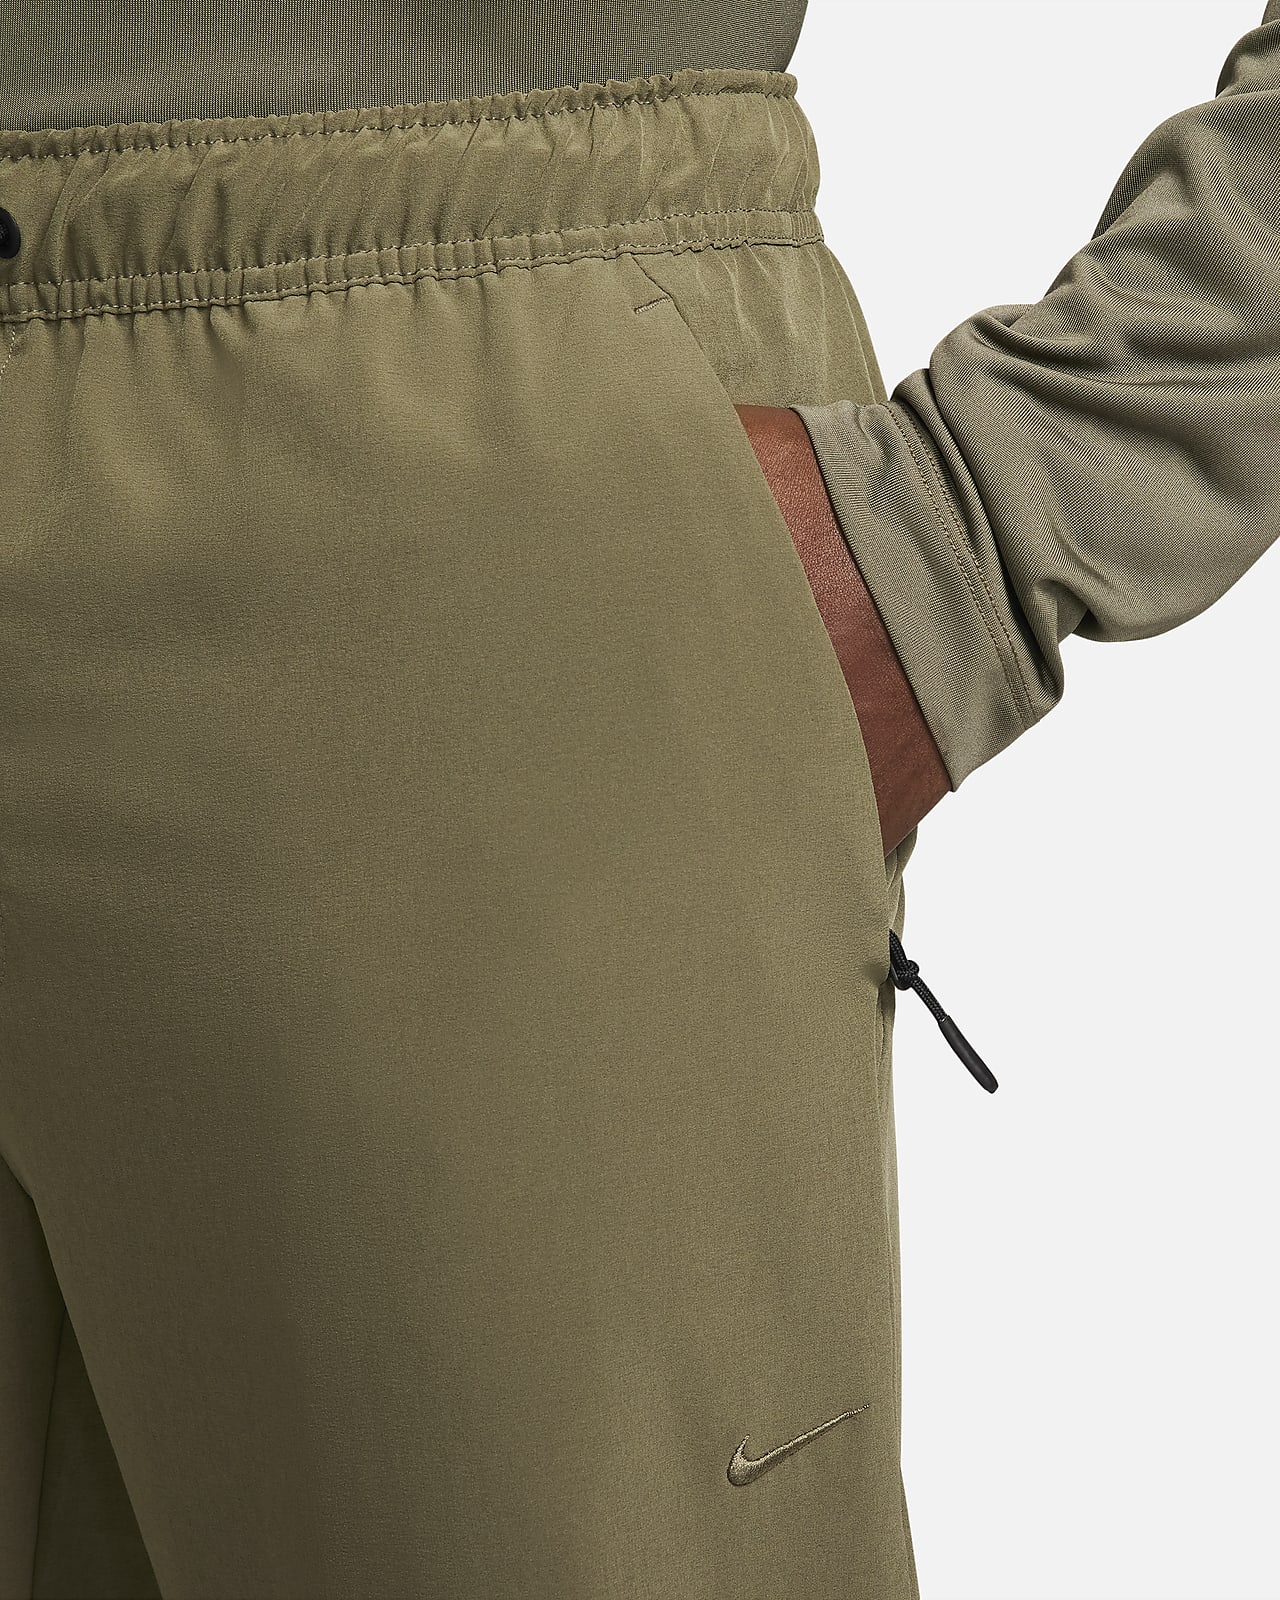 Under Armour khaki jogger pants womens size medium tapered pockets elastic  waist